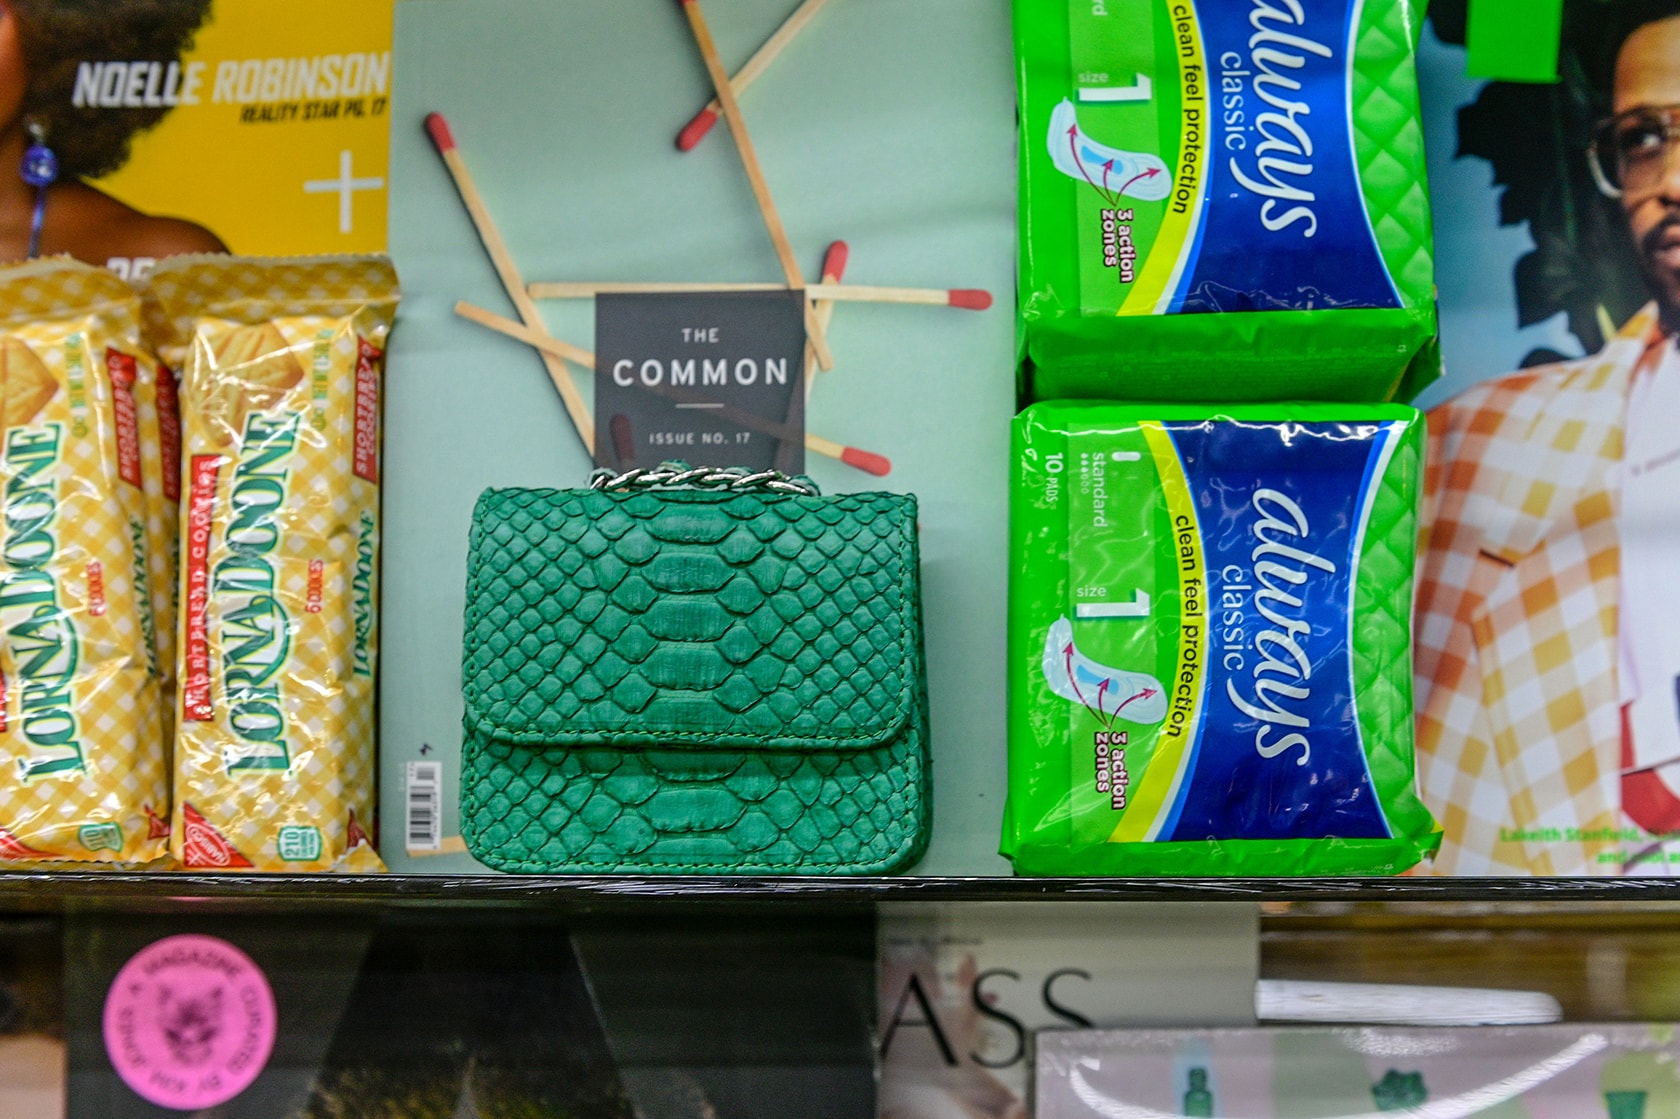 gelareh mizrahi bags mini mart pop up new york city neon bodega shop purses